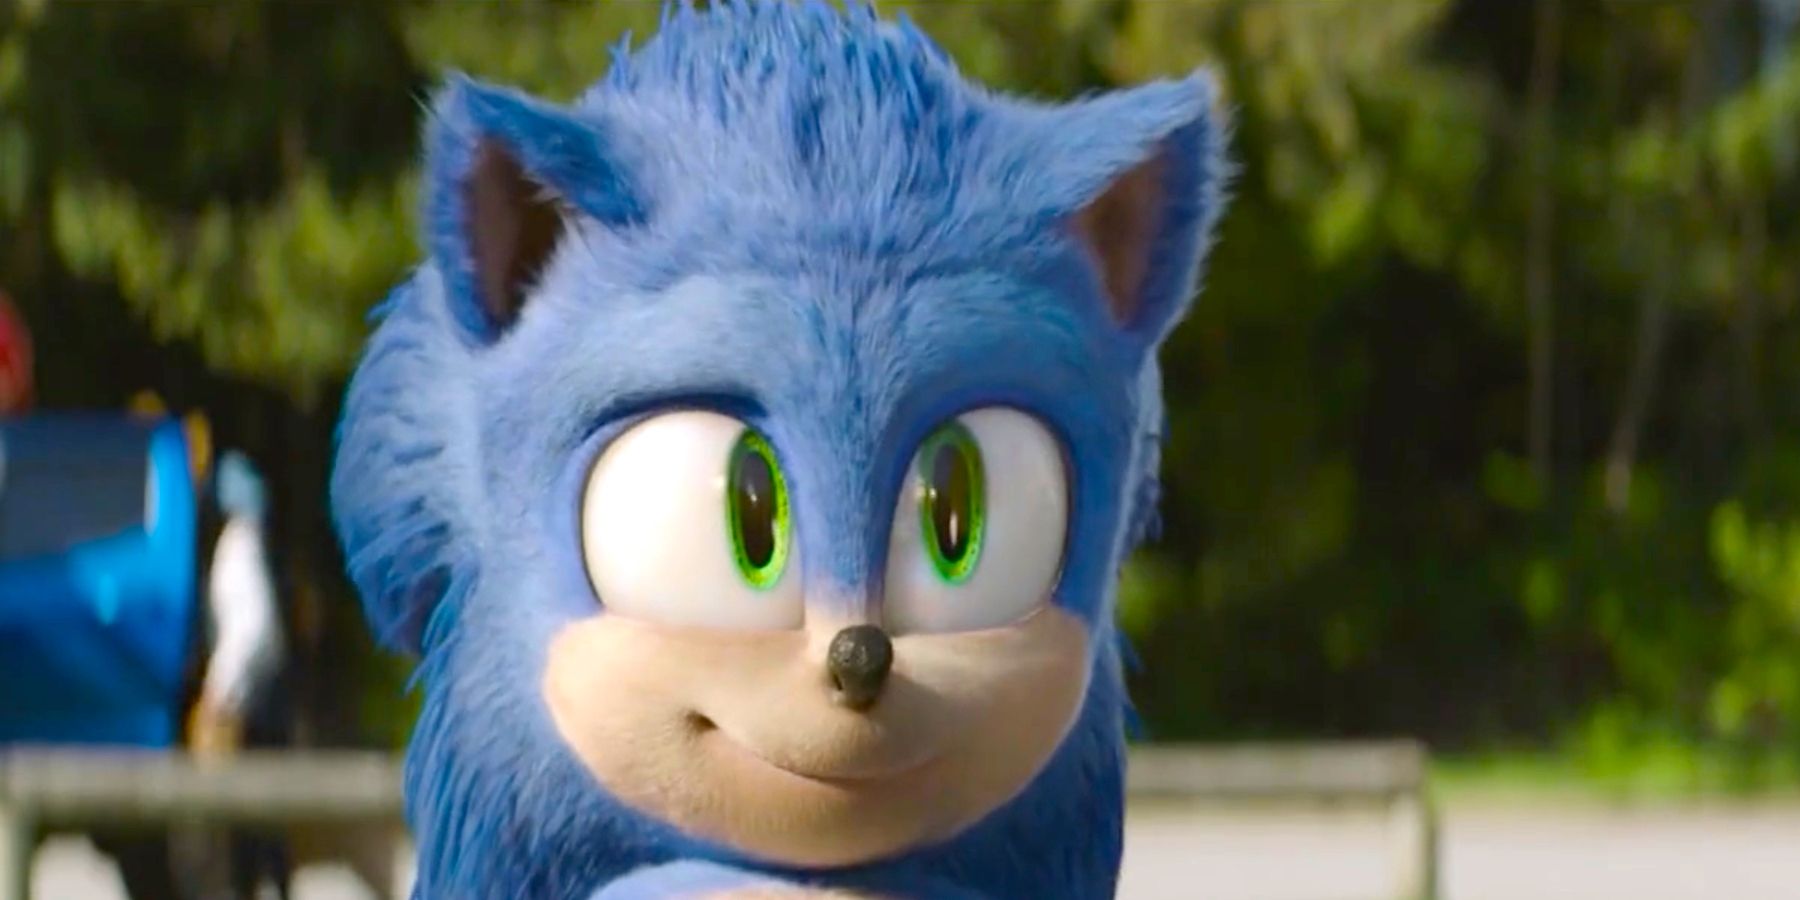 Sonic 2 in netflix is coming soon